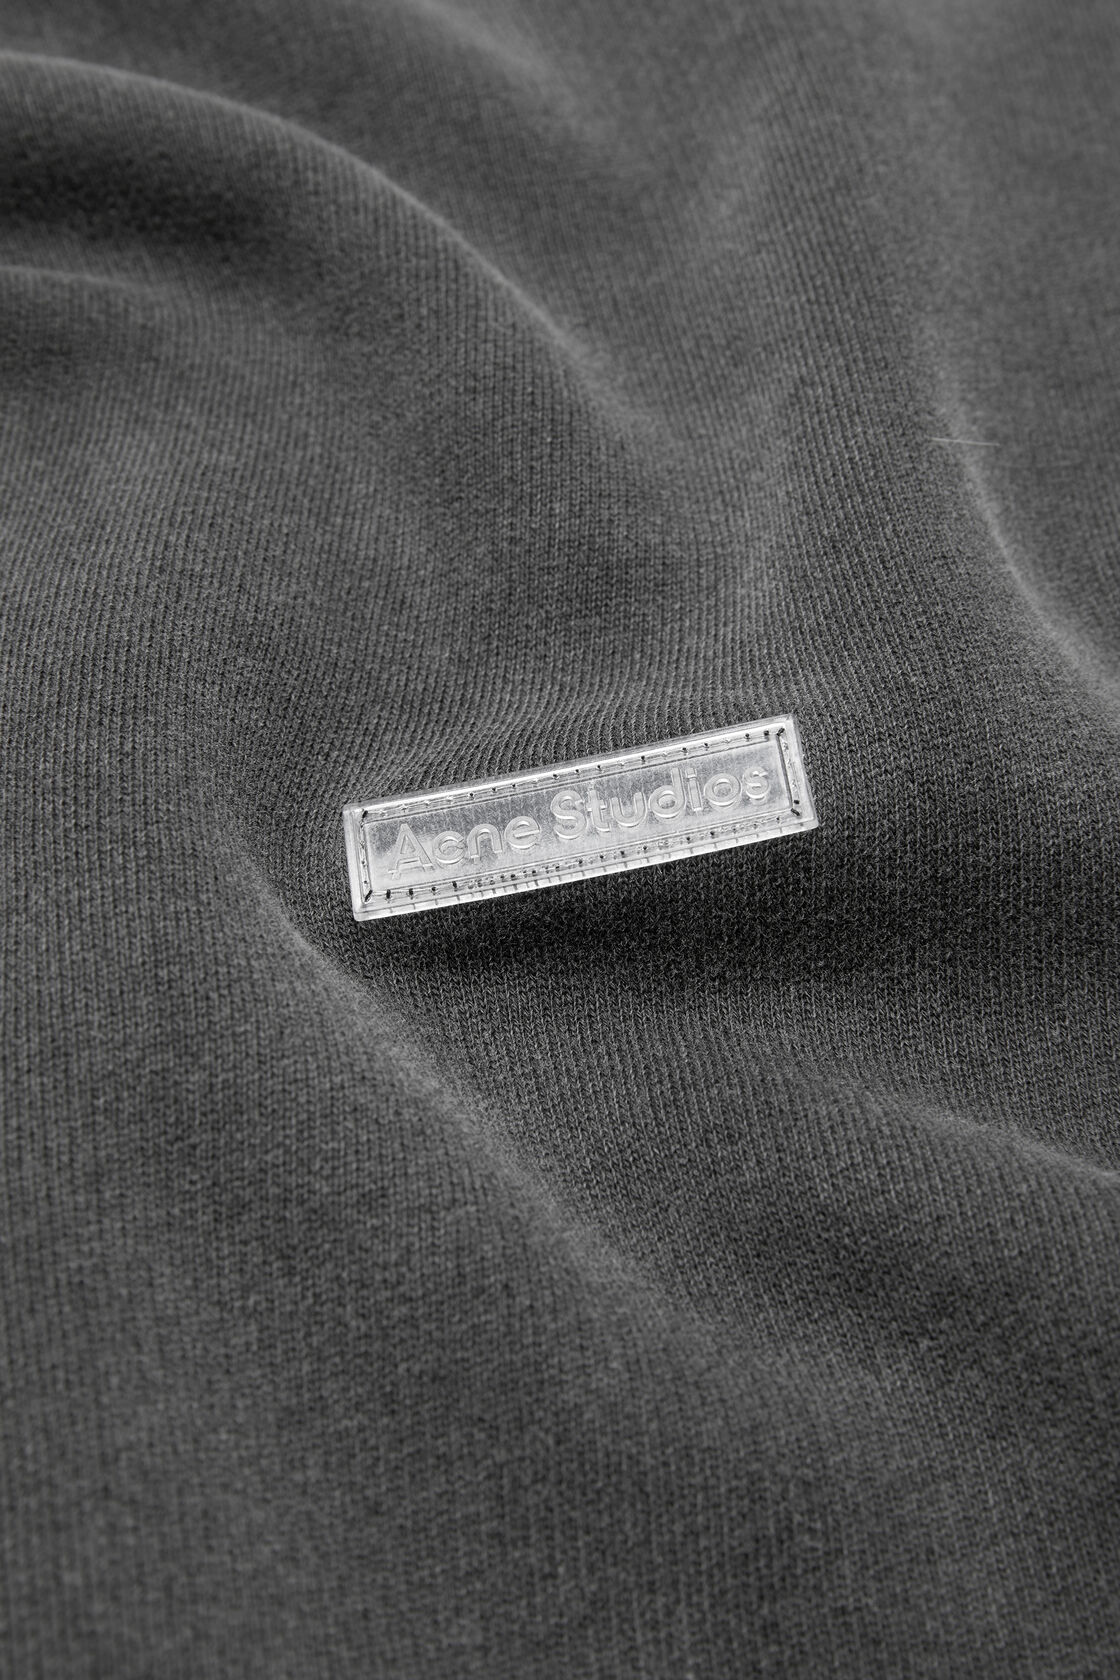 ACNE STUDIOS Vintage Sweatshirt in Faded Black S